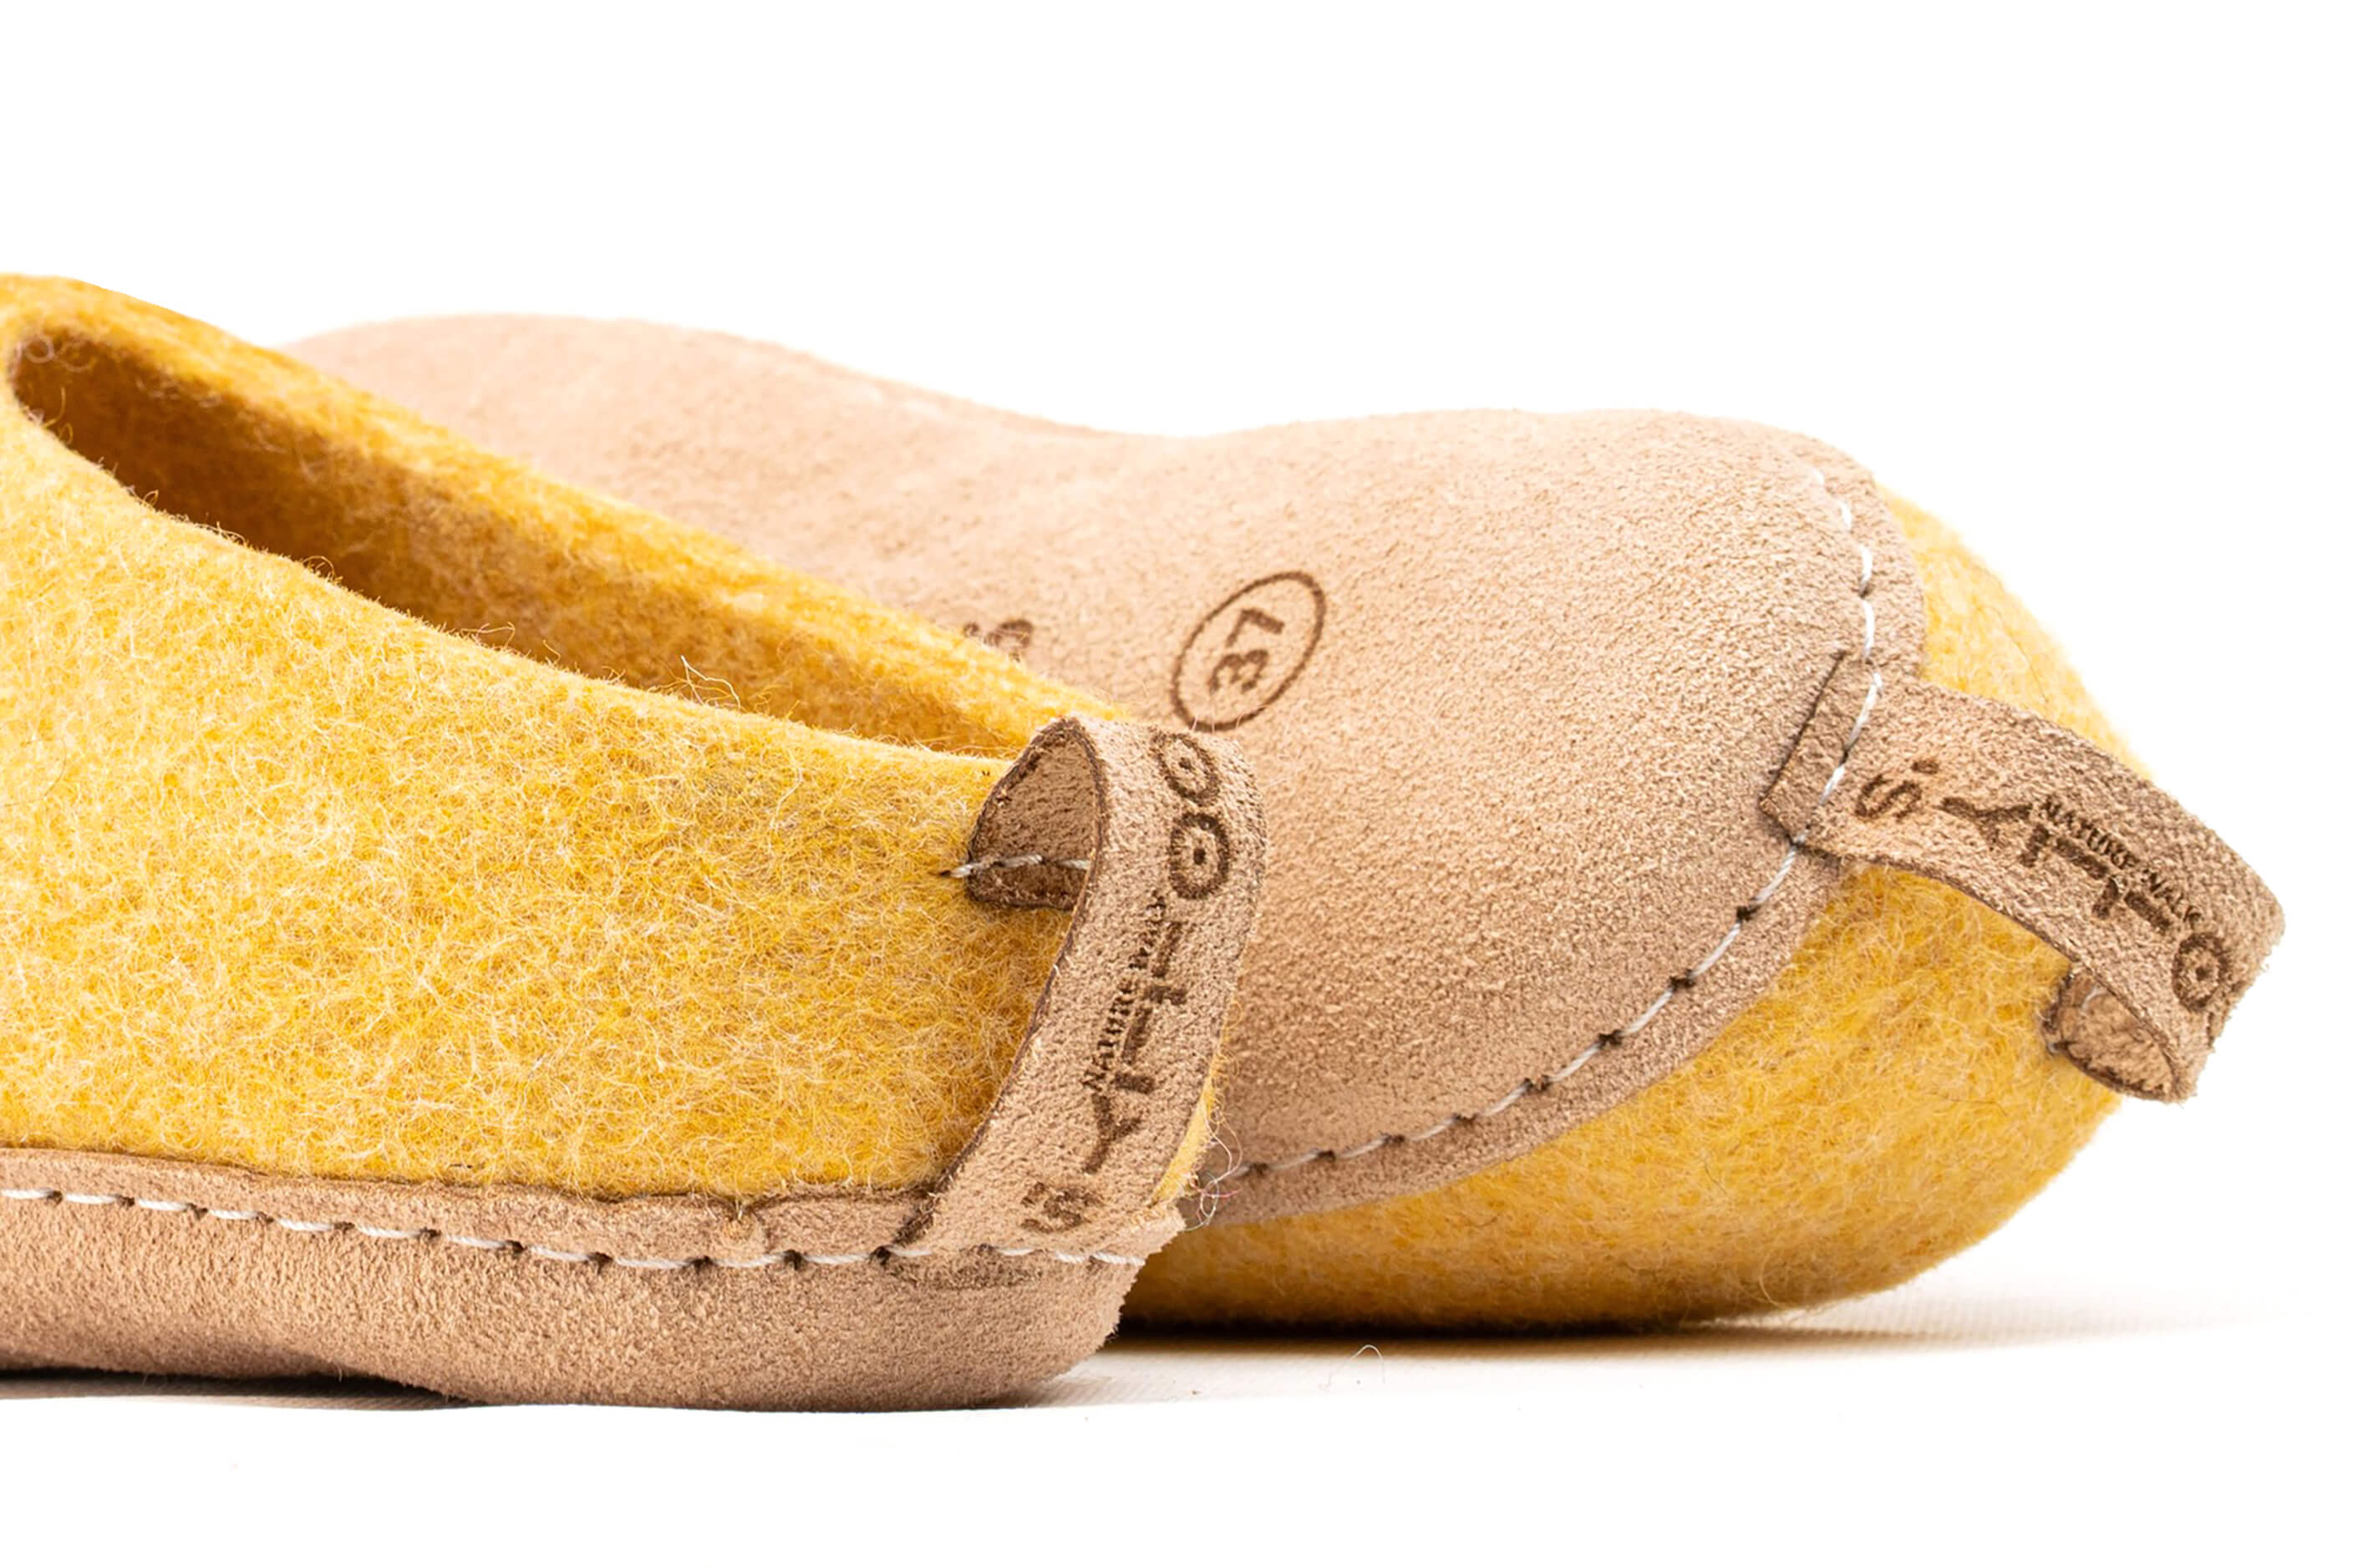 Indoor Open Heel Slippers With Leather Sole - Mustard